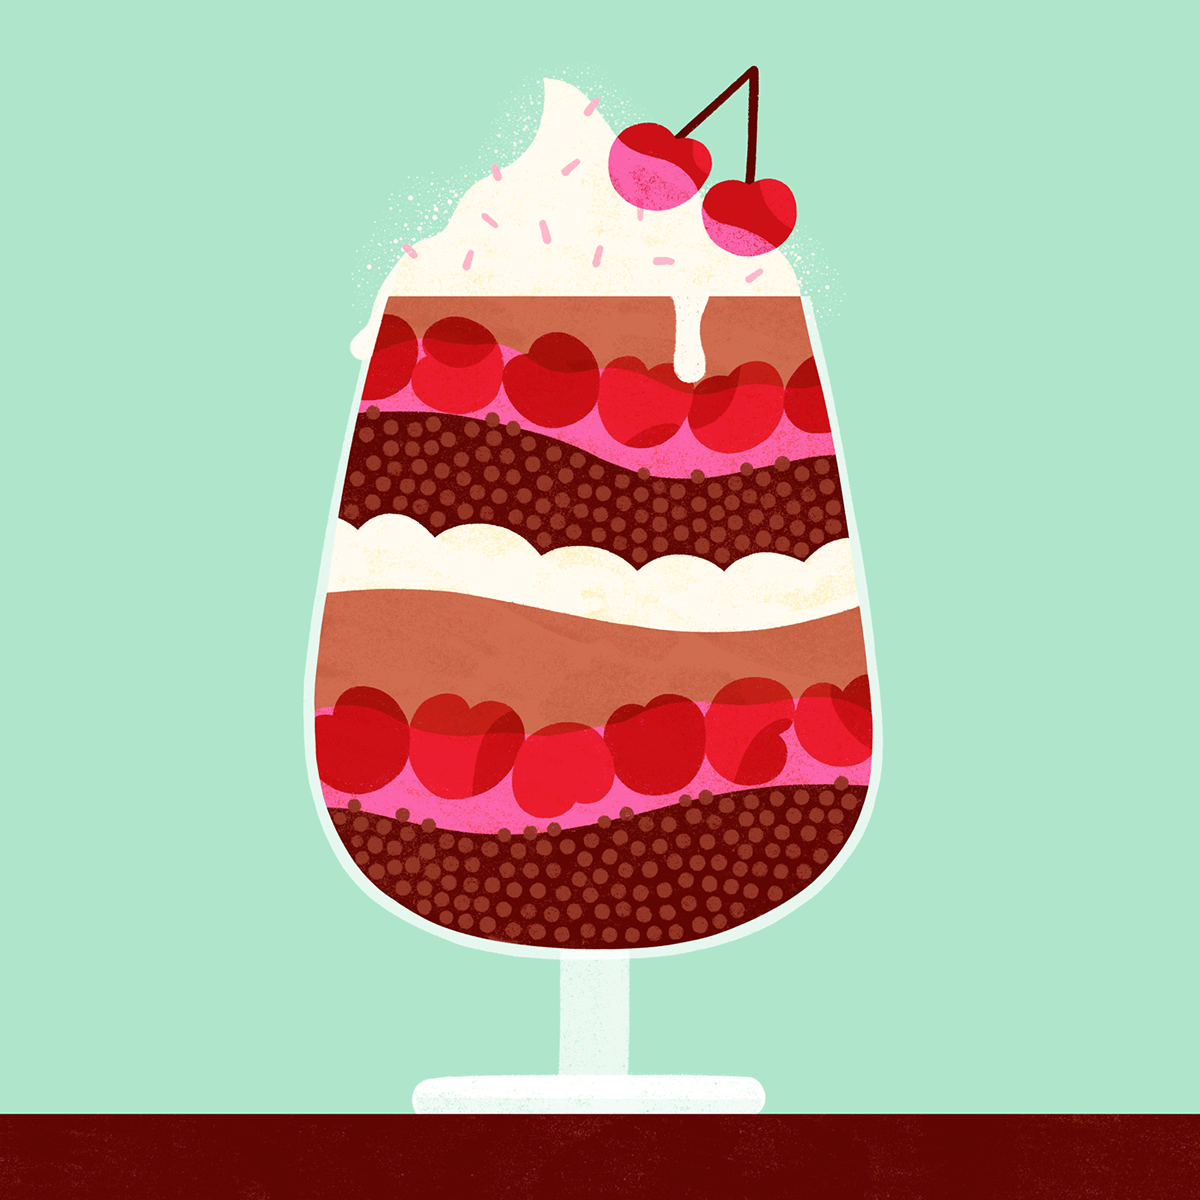 Food  dessert cake ice cream trifle sweet treat stylized modern cute